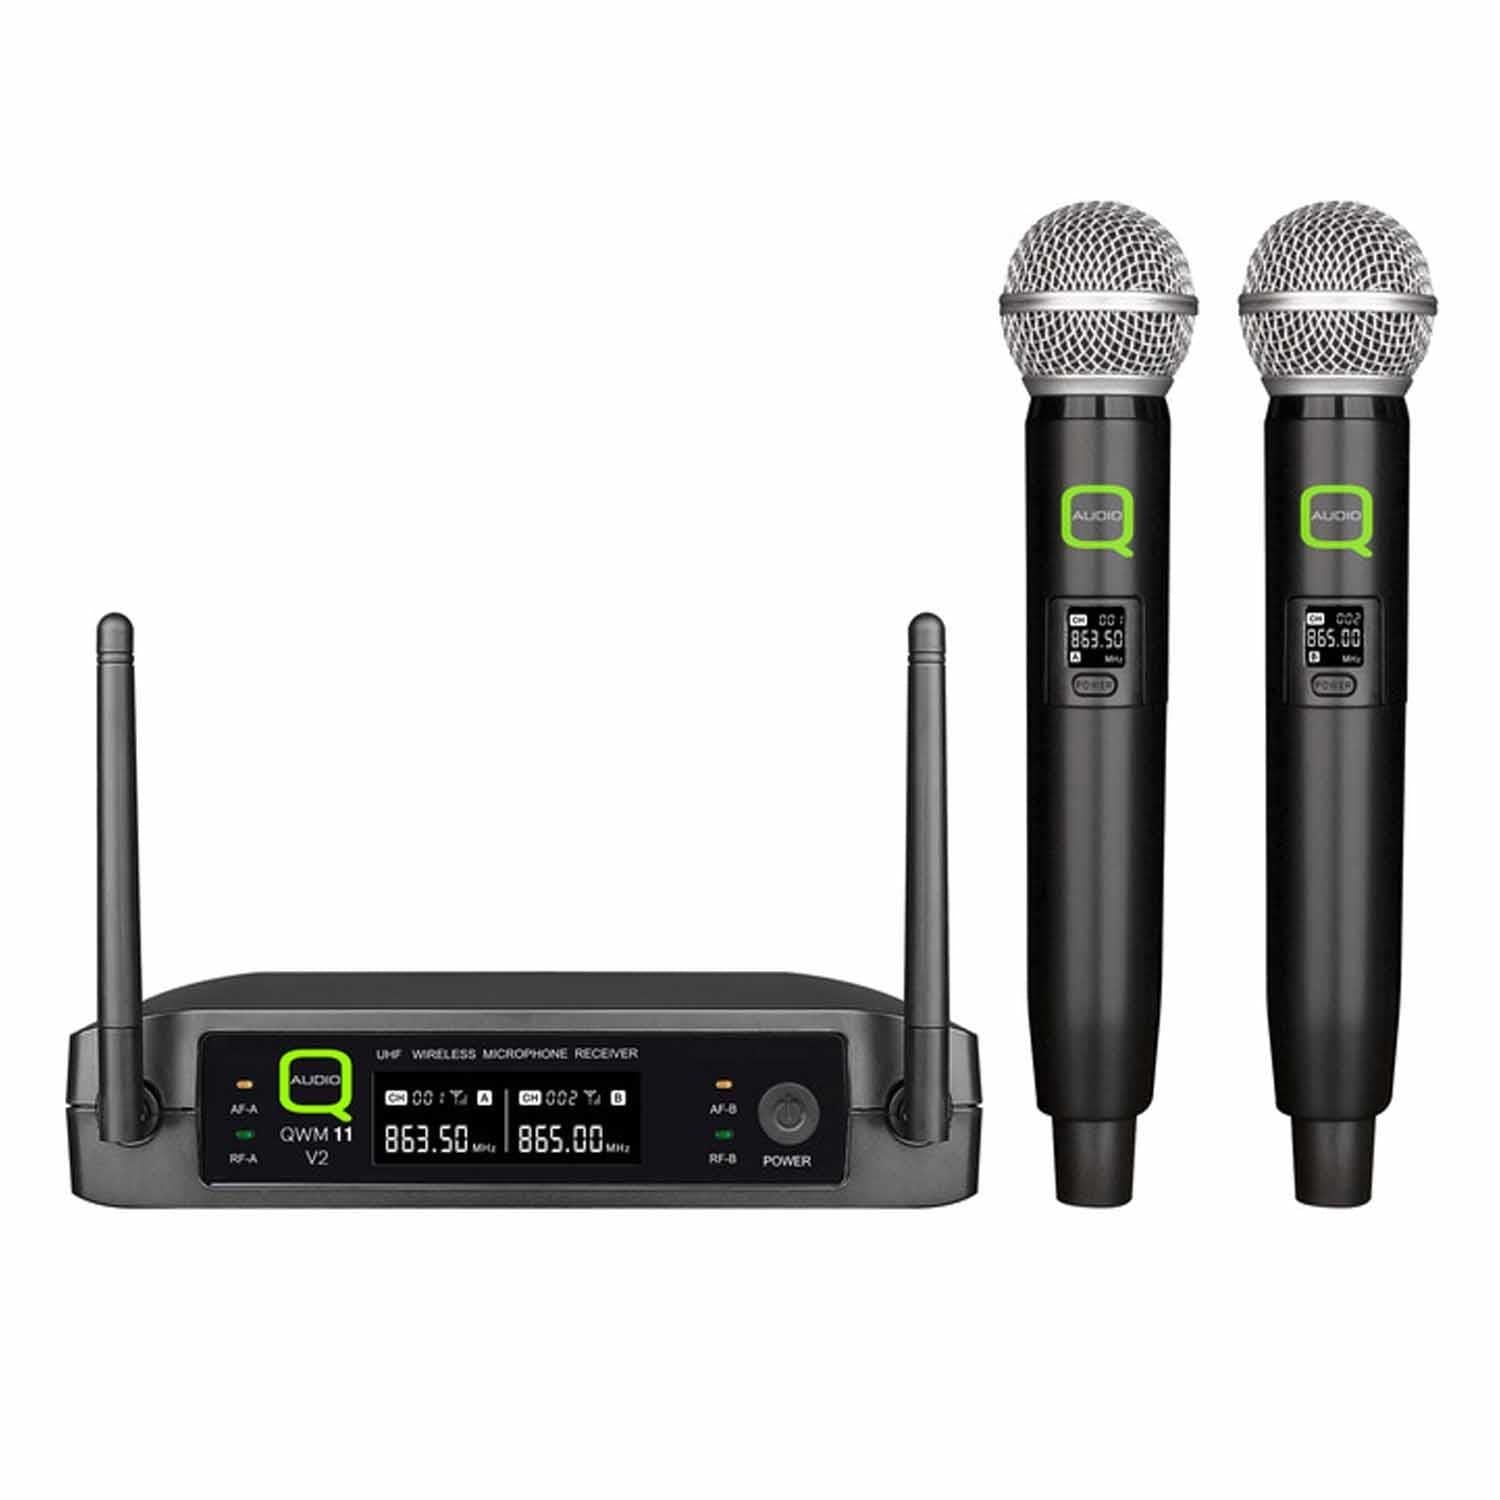 Q-Audio QWM11-V2 Dual UHF Wireless handheld Microphone System (863.1 - 864.1MHz) - DY Pro Audio